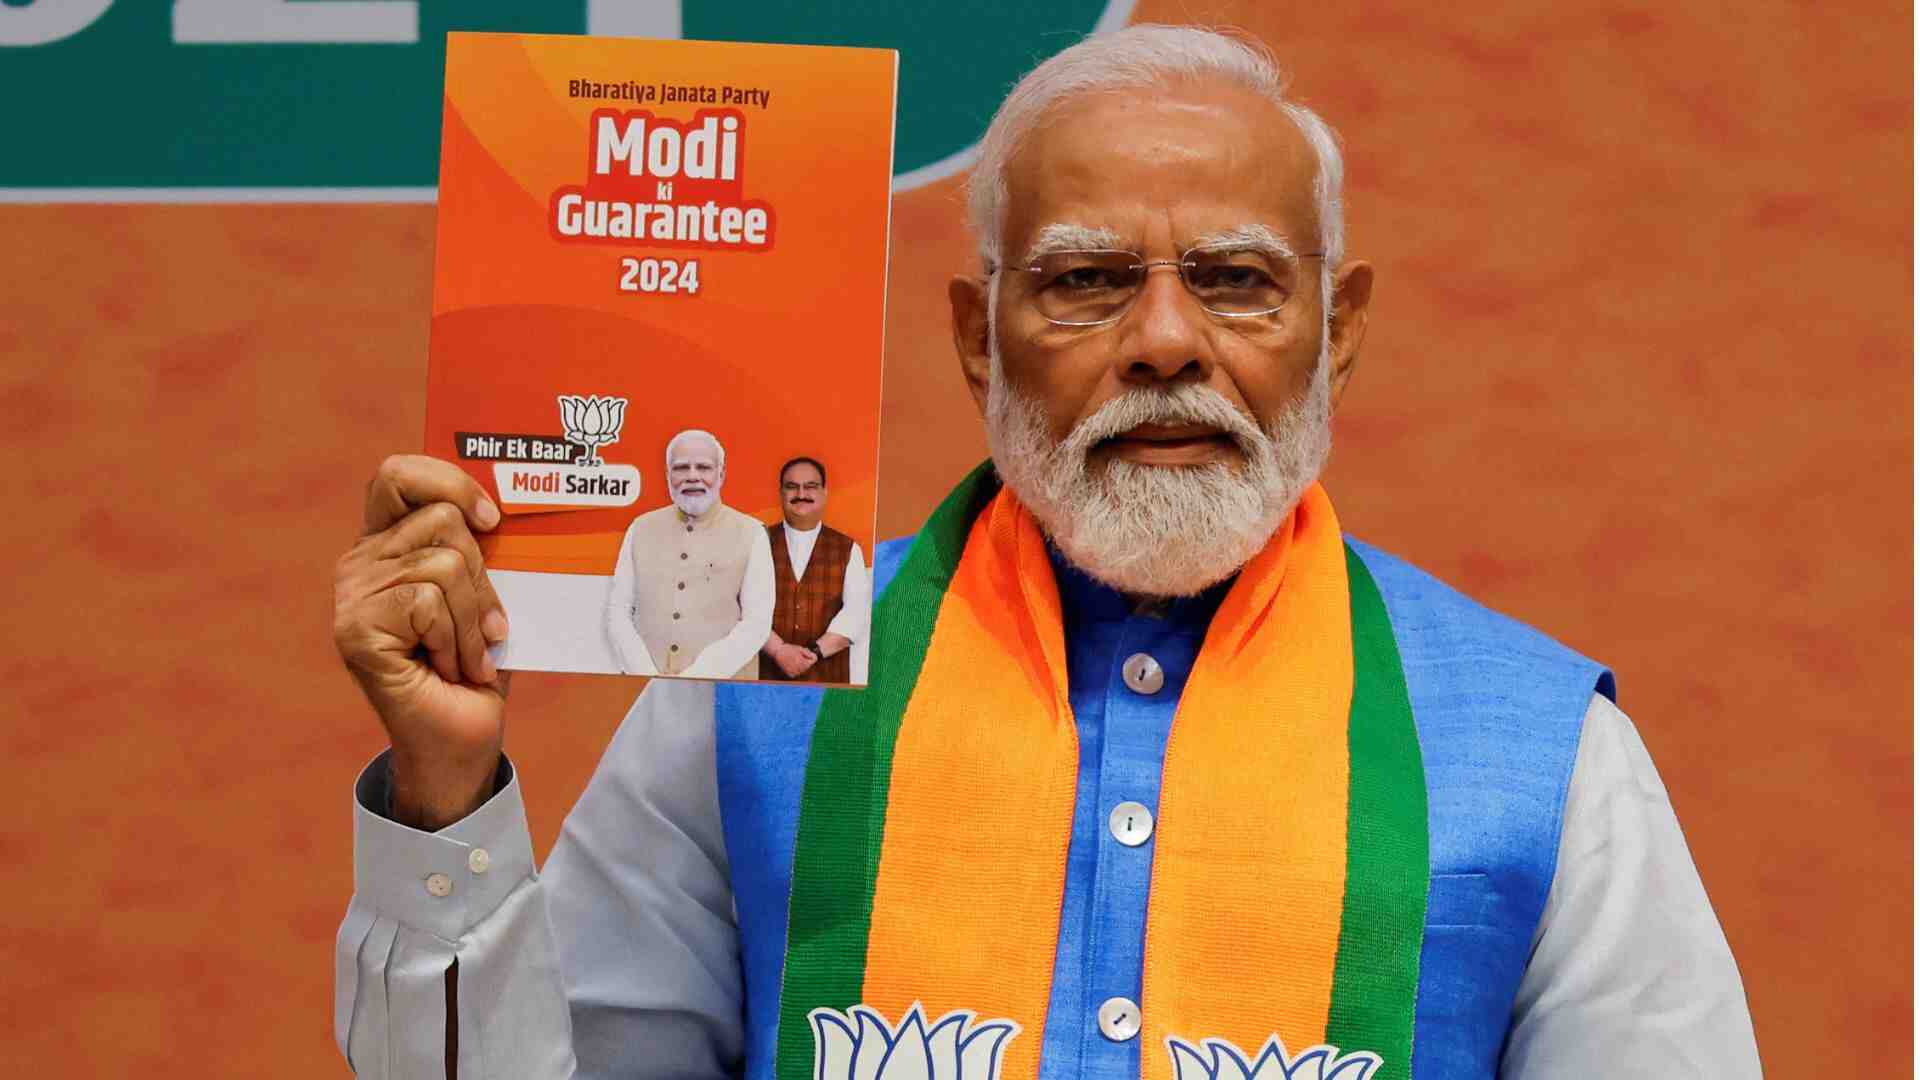 PM Modi holds BJP's Manifesto titled 'Modi's Guarantee 2024'